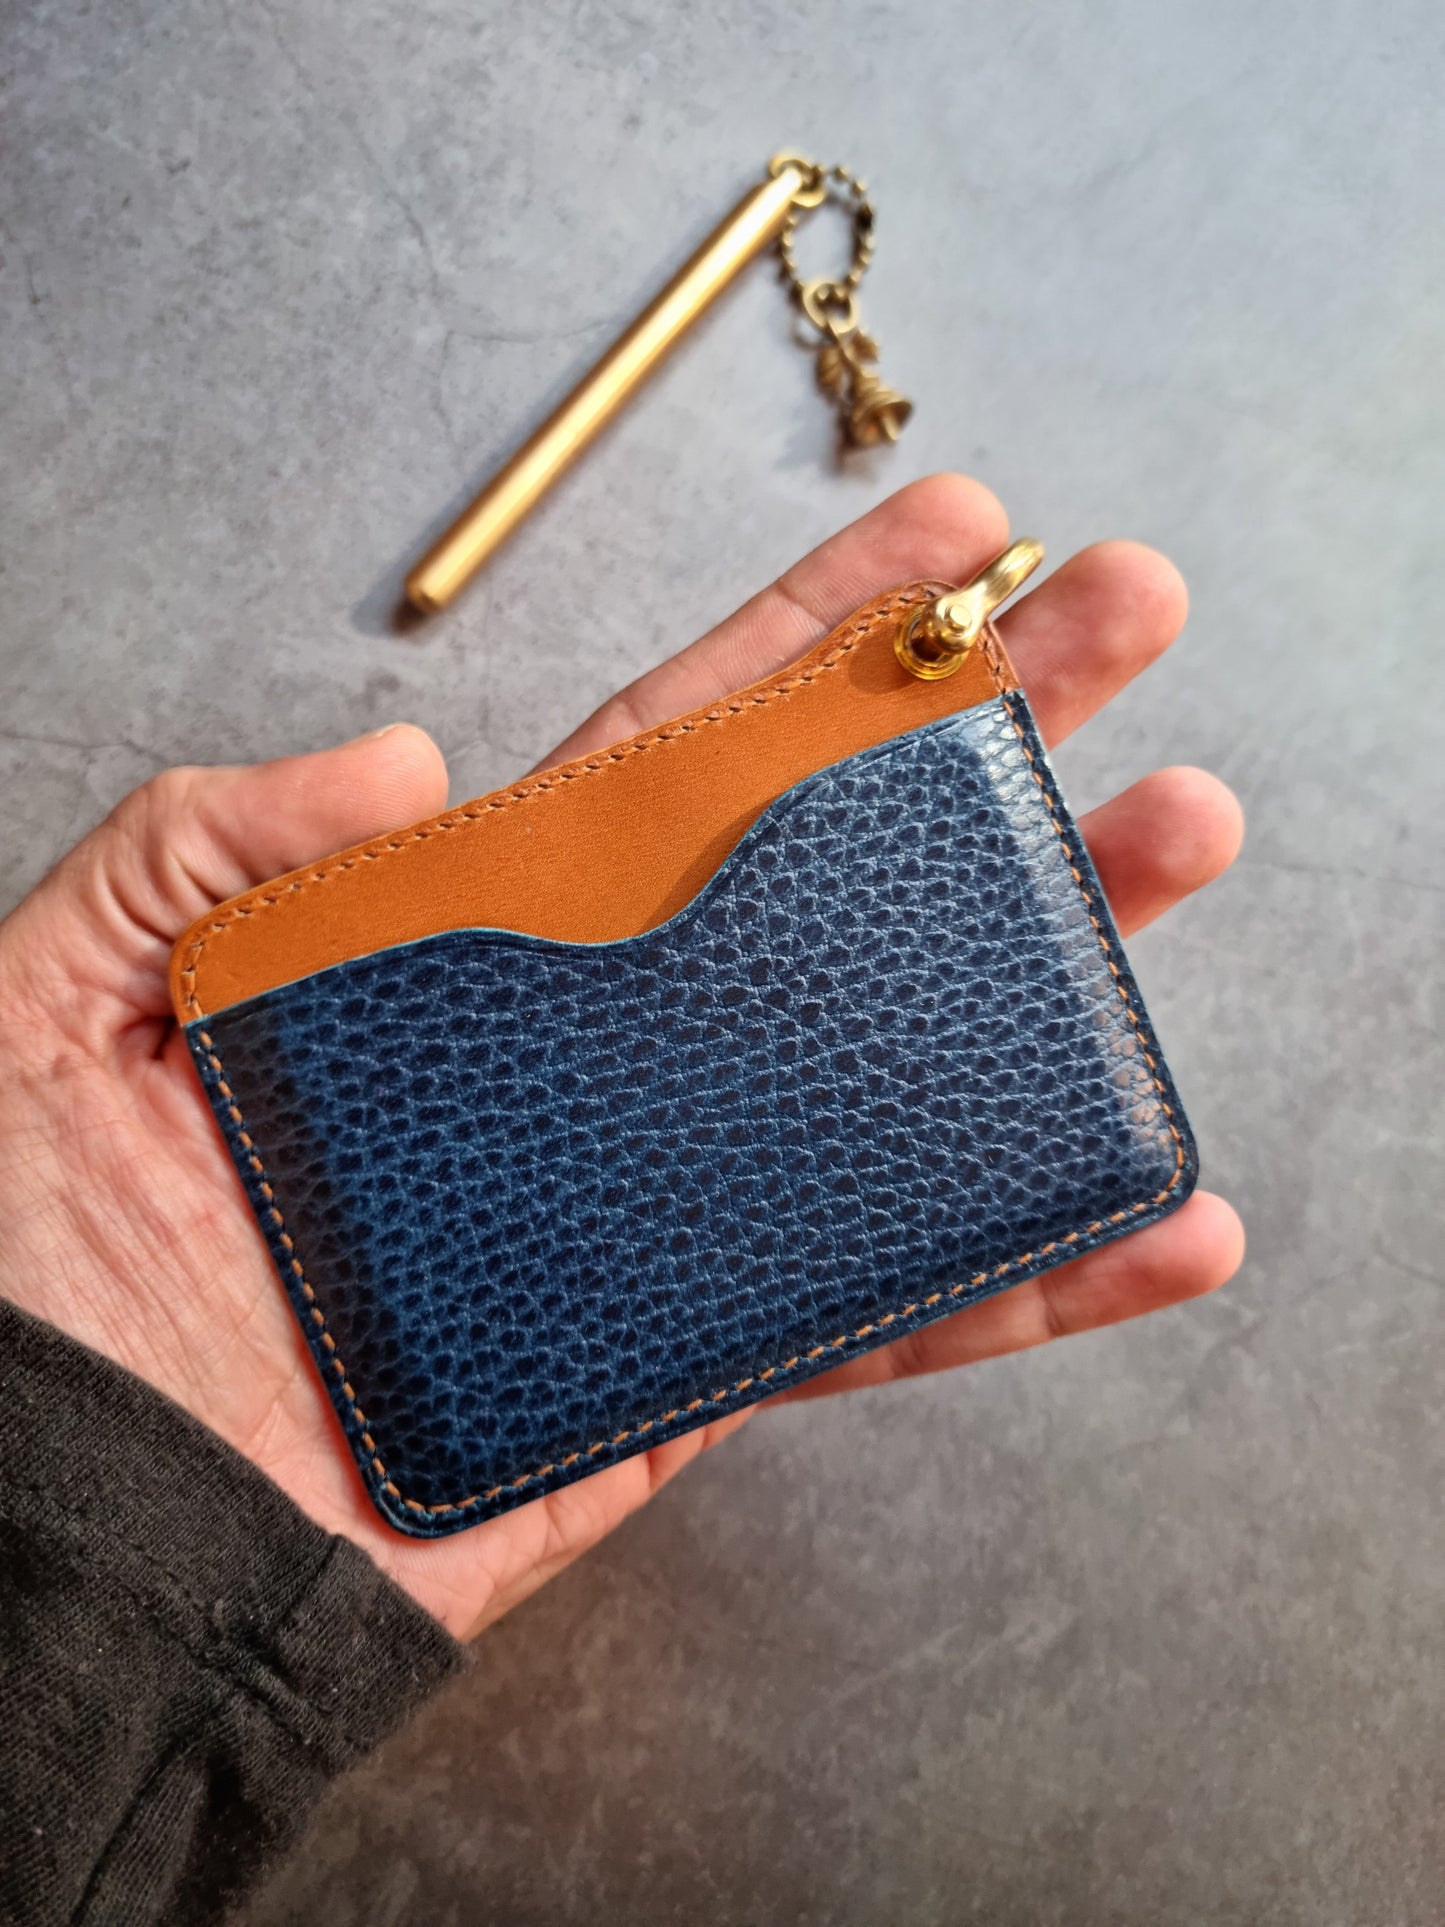 Crafter's wallet - Pdf Pattern